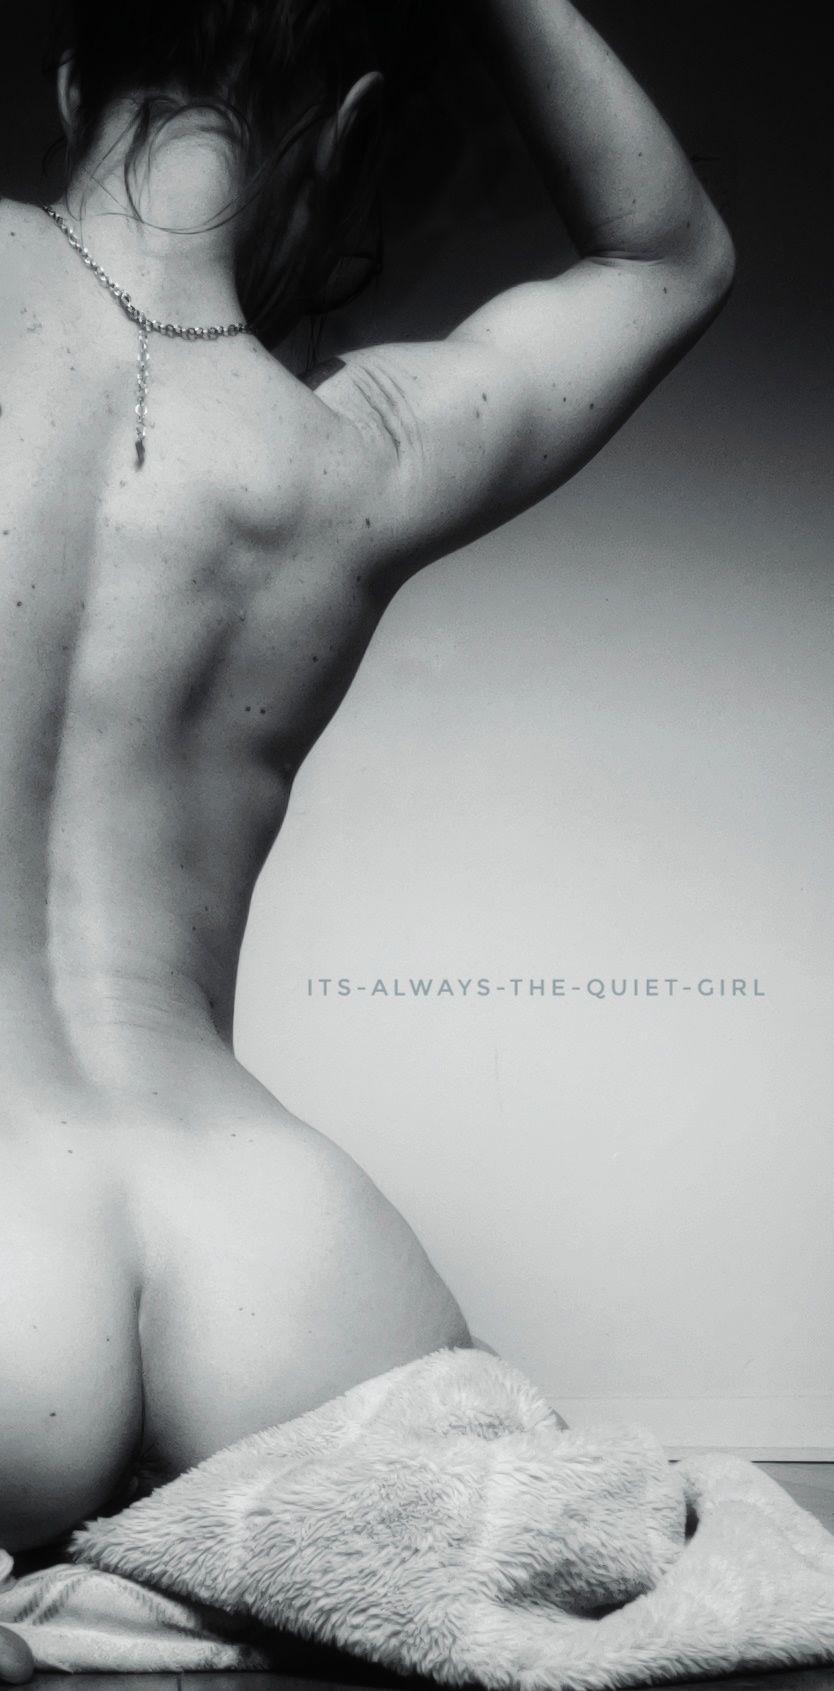 Sex its-always-the-quiet-girl-deact:Bastet. pictures